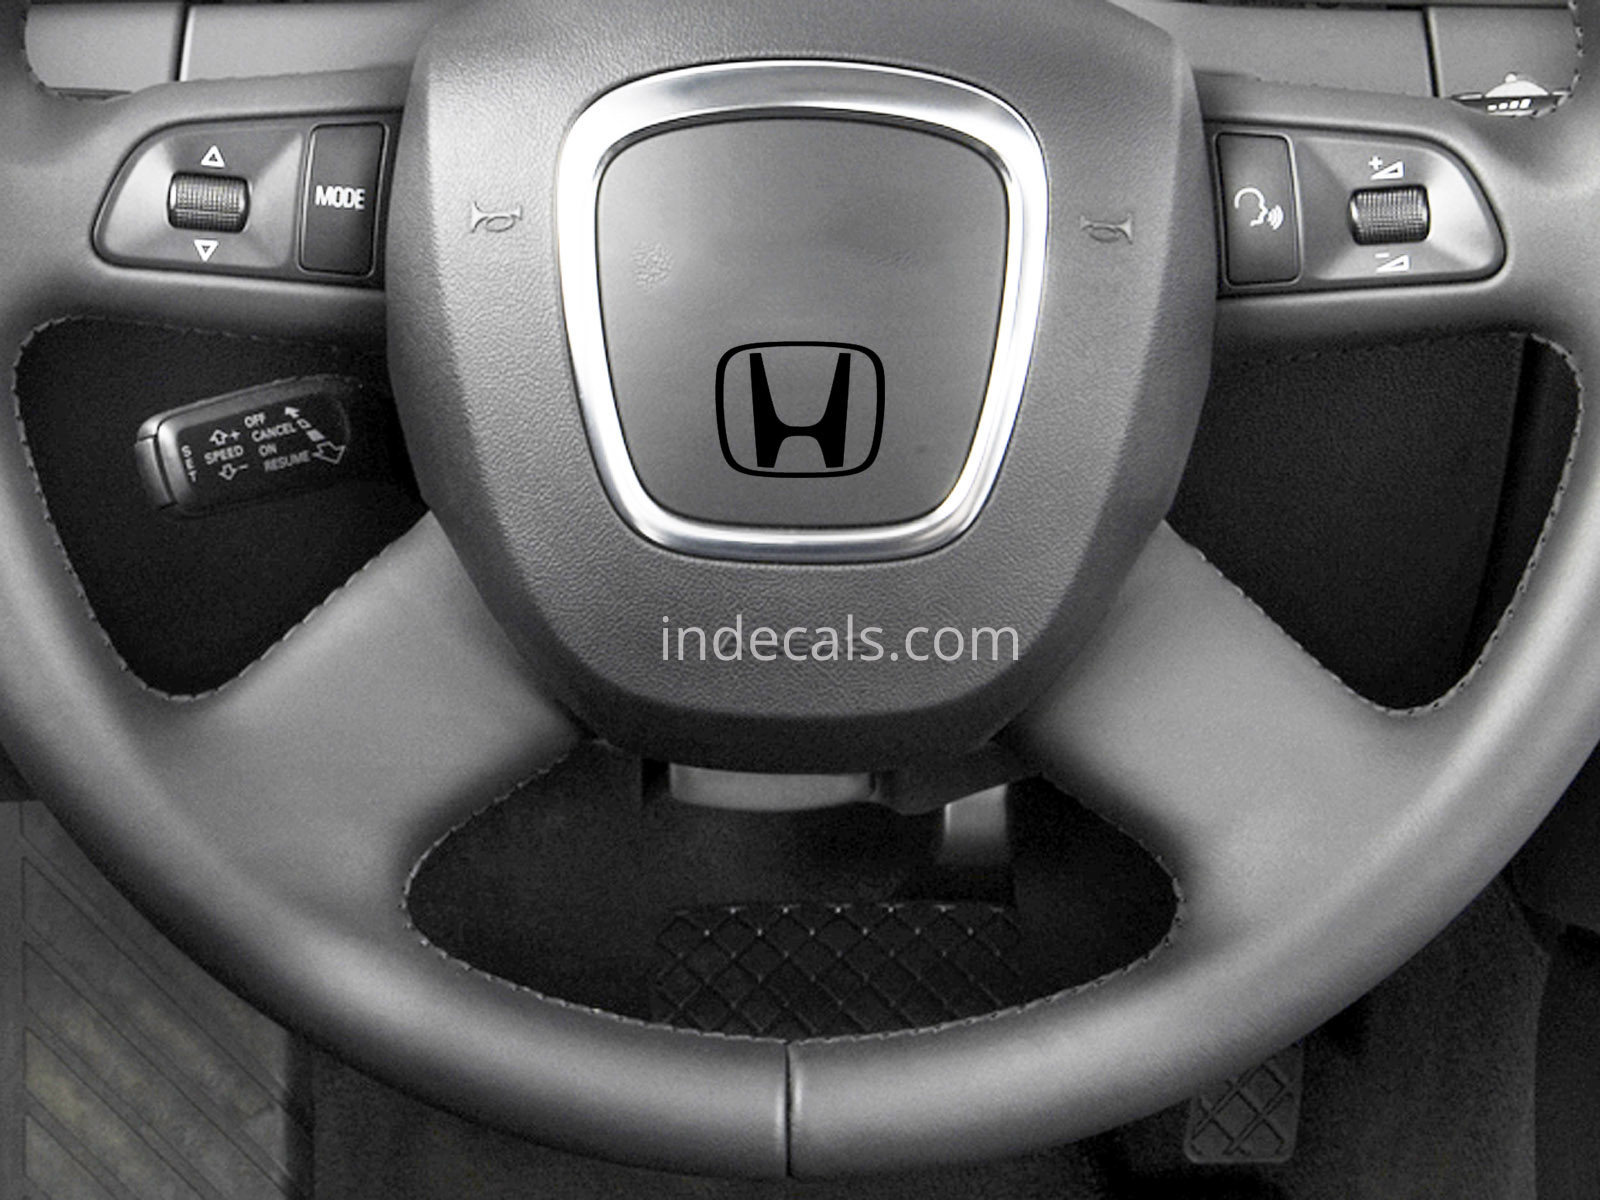 3 x Honda Stickers for Steering Wheel - Black